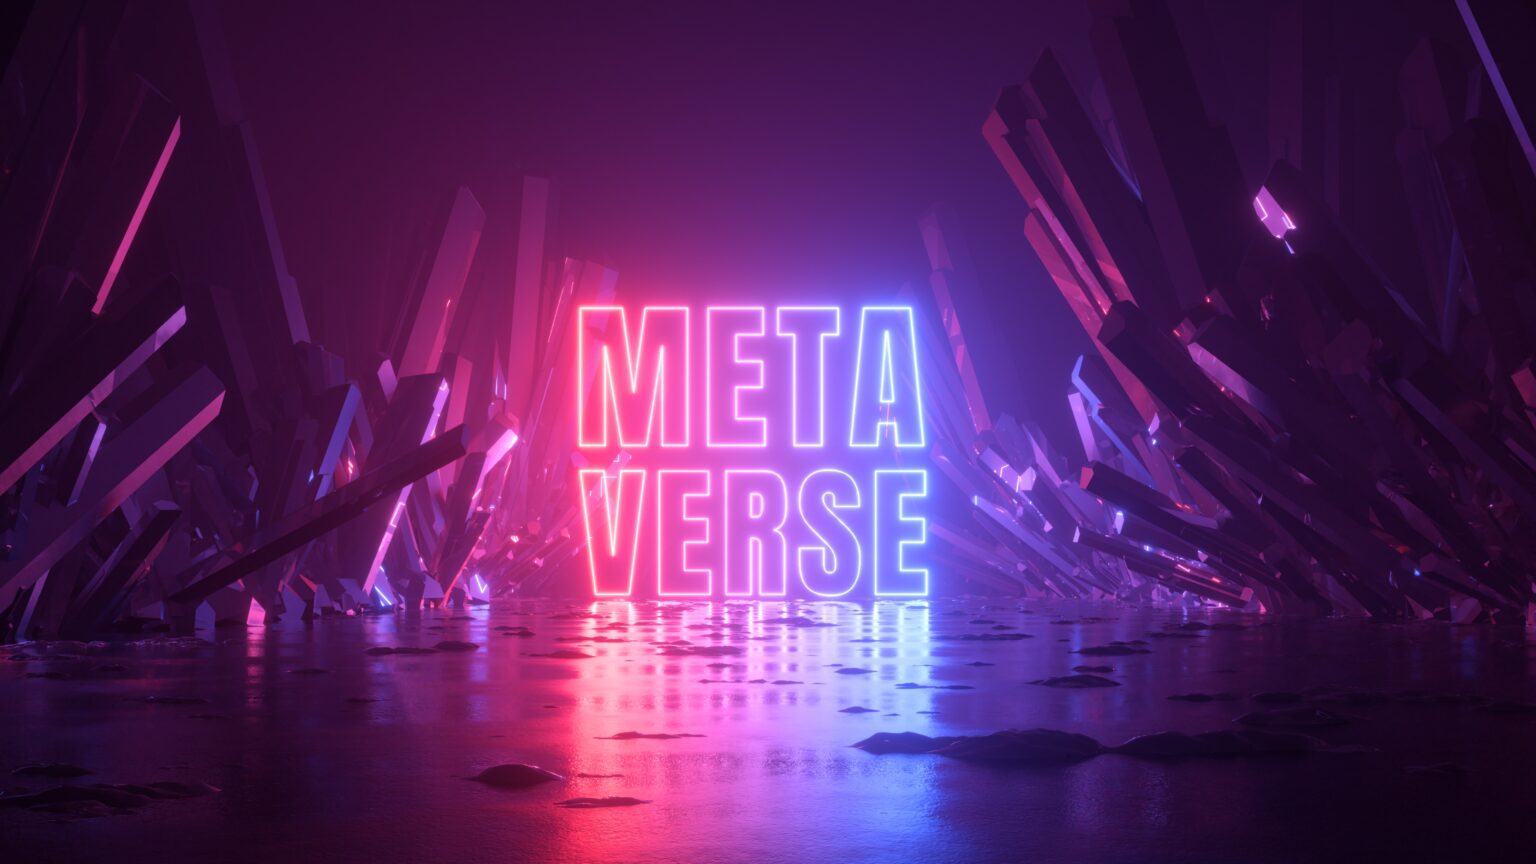 The word metaverse